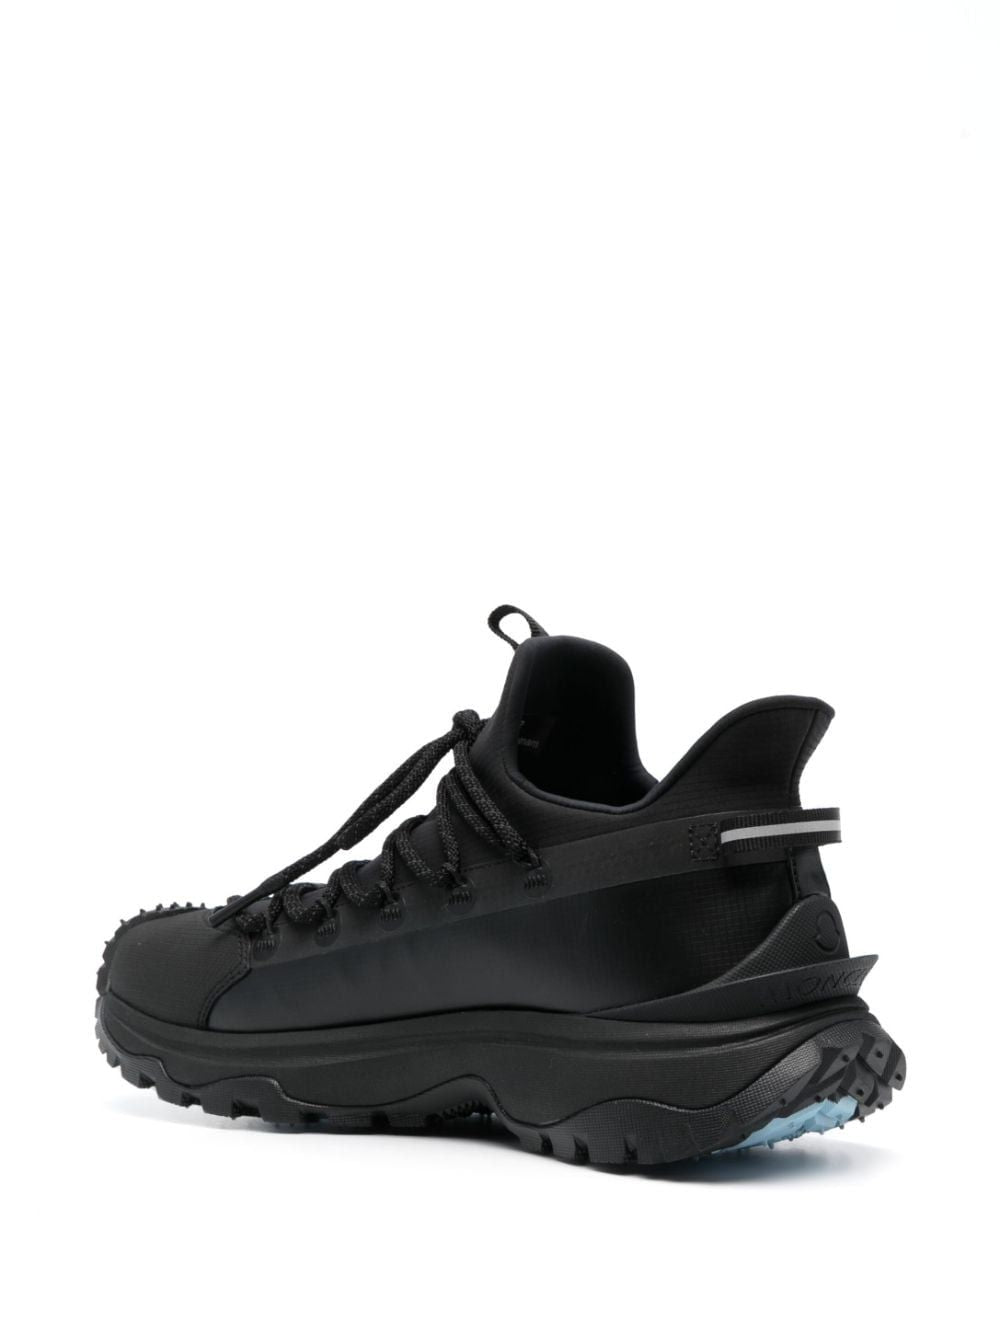 Black Trail Running Shoes for Men